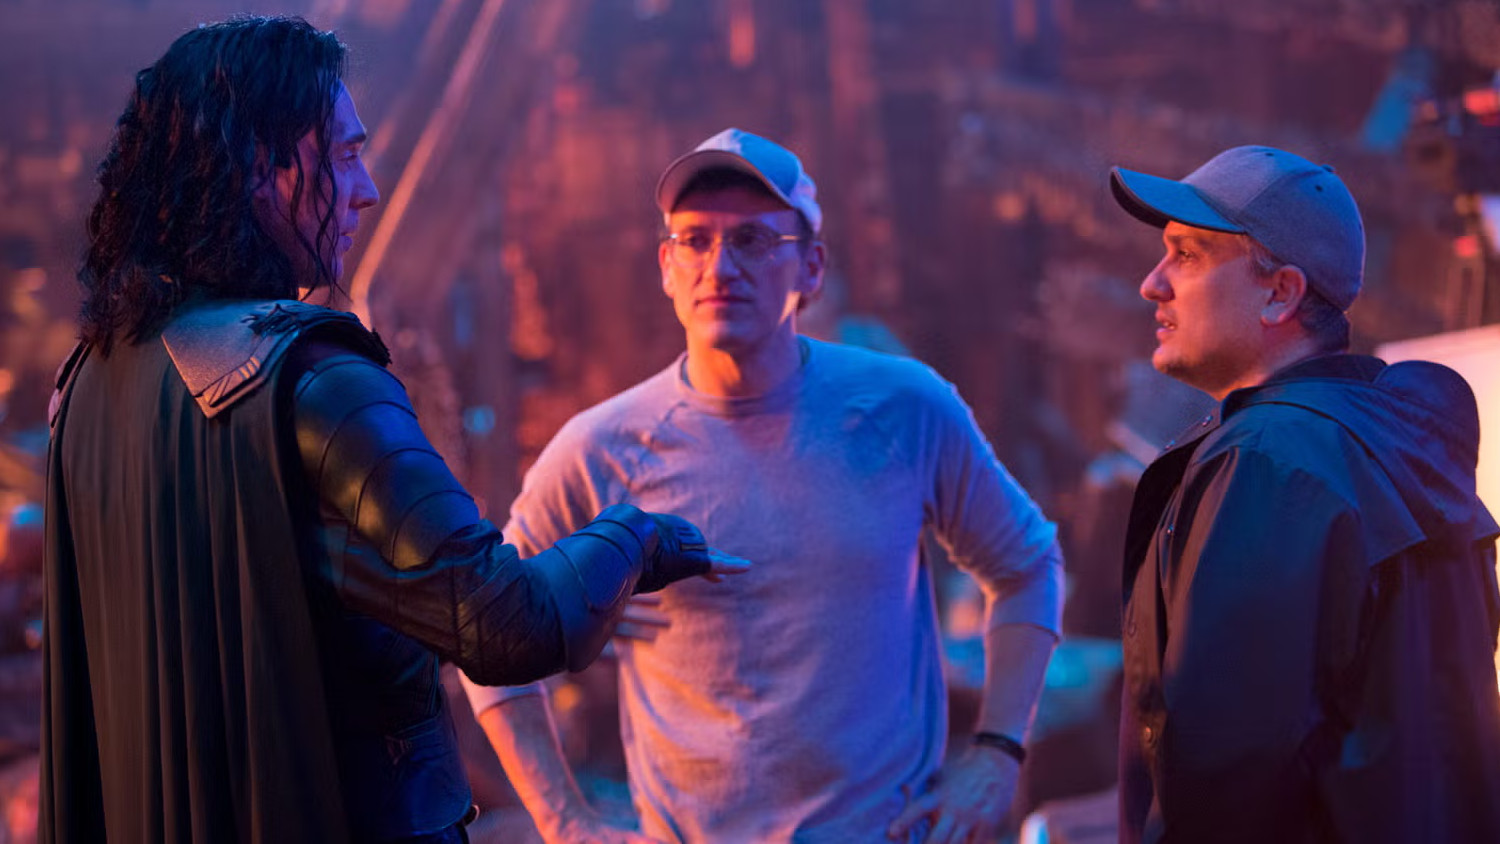 Russos Returning To Save Marvel: In Talks For Avengers 5 & ‘Secret Wars’